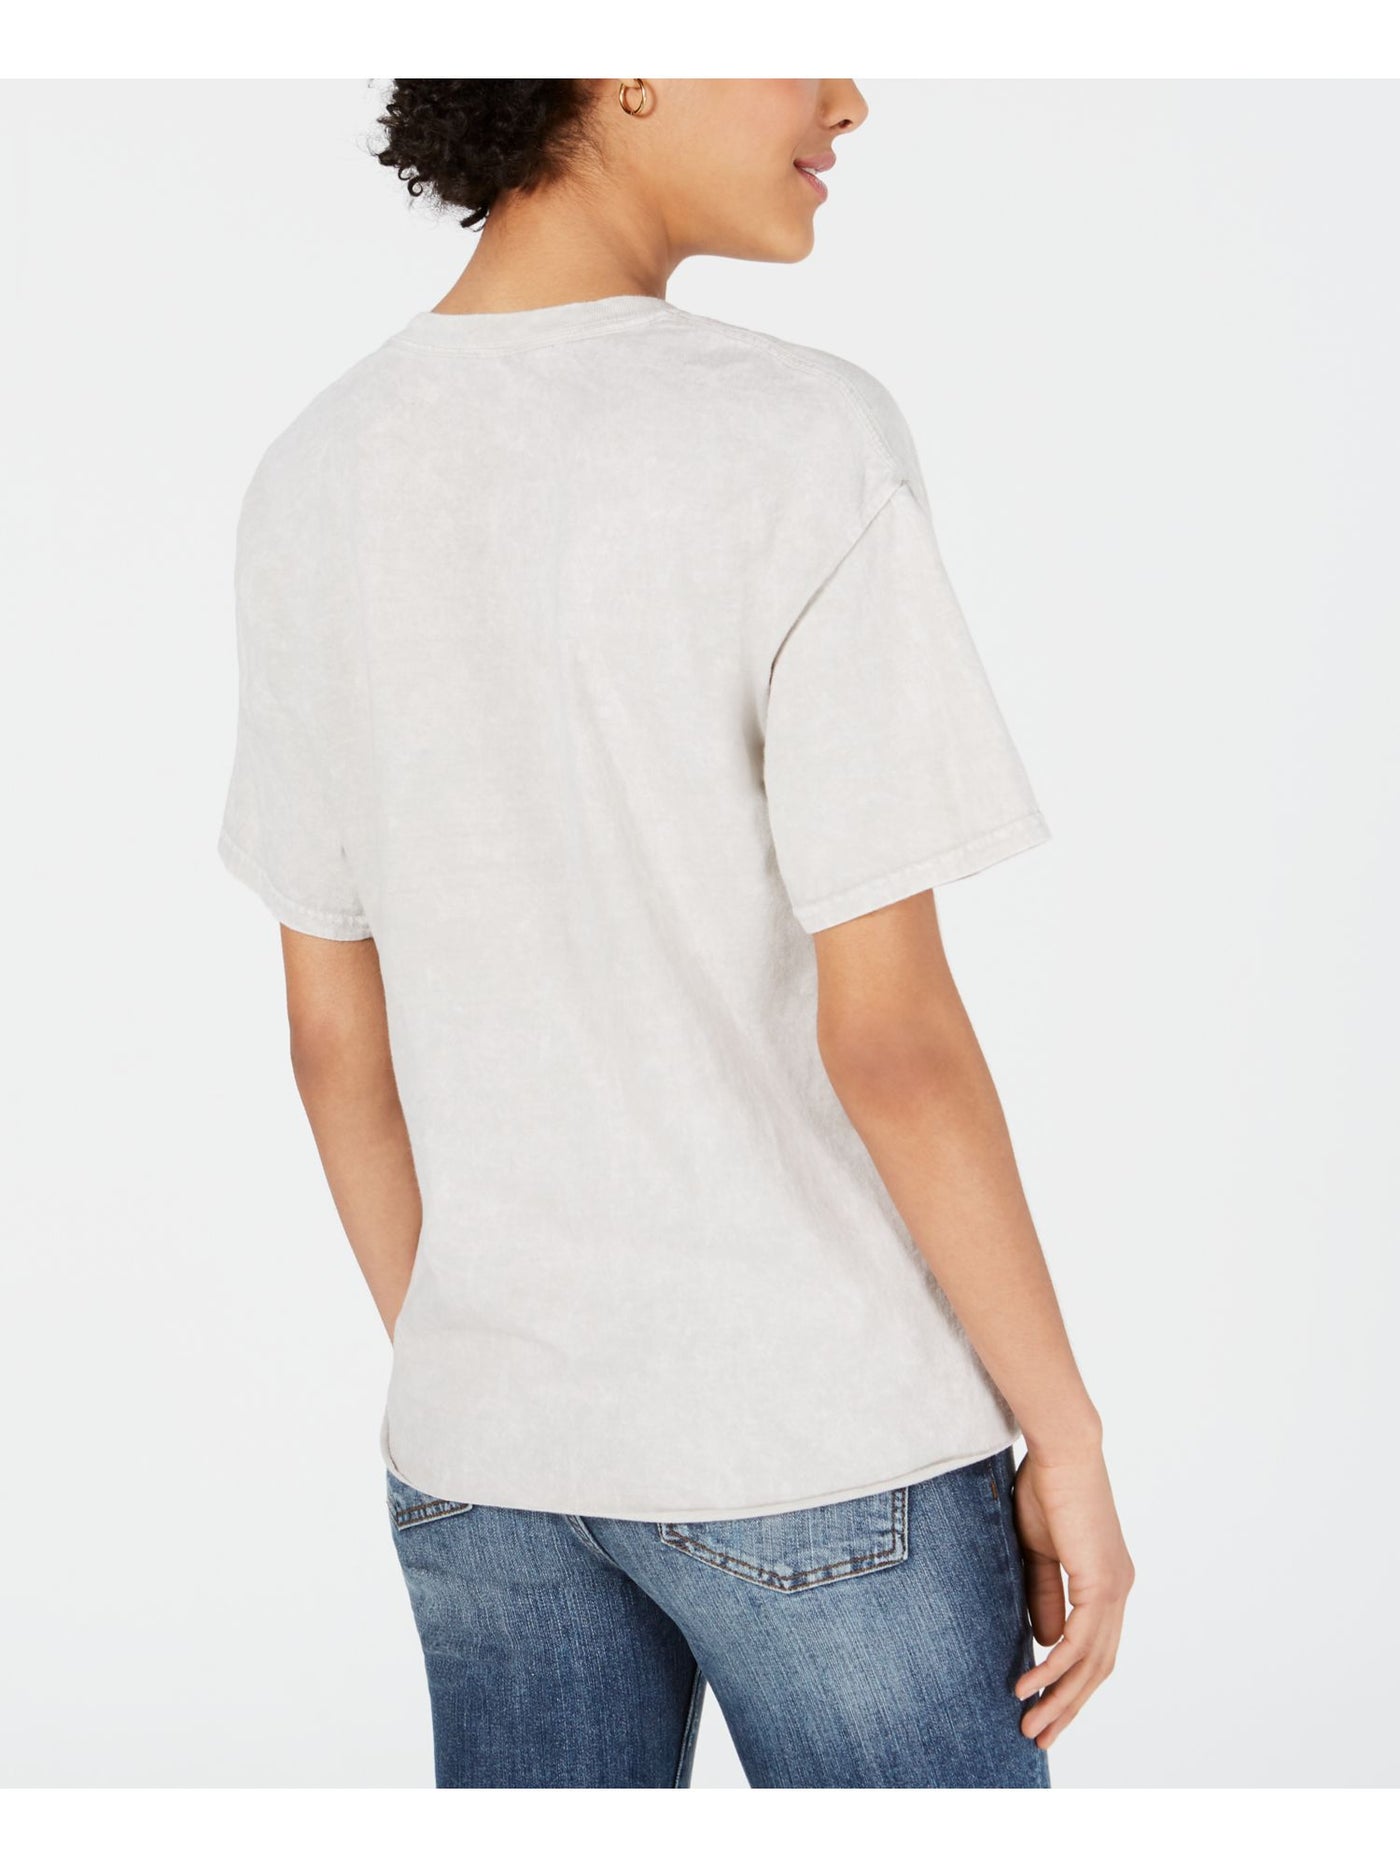 TRUE VINTAGE Womens Beige Printed Short Sleeve Crew Neck T-Shirt XS